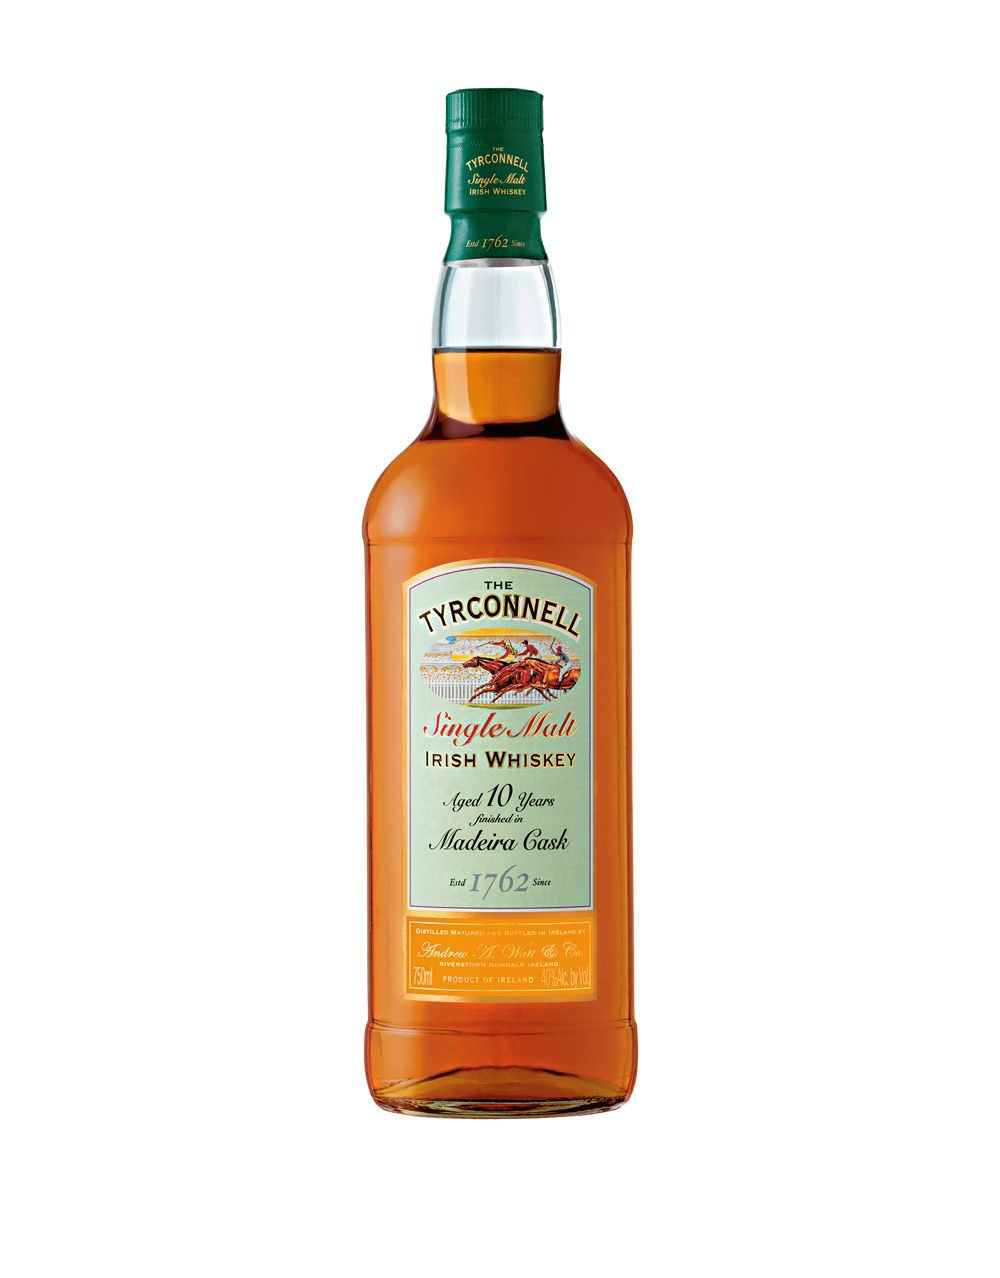 The Tyrconnell 10 Year Single Malt Irish Whiskey, Madeira Cask Finish